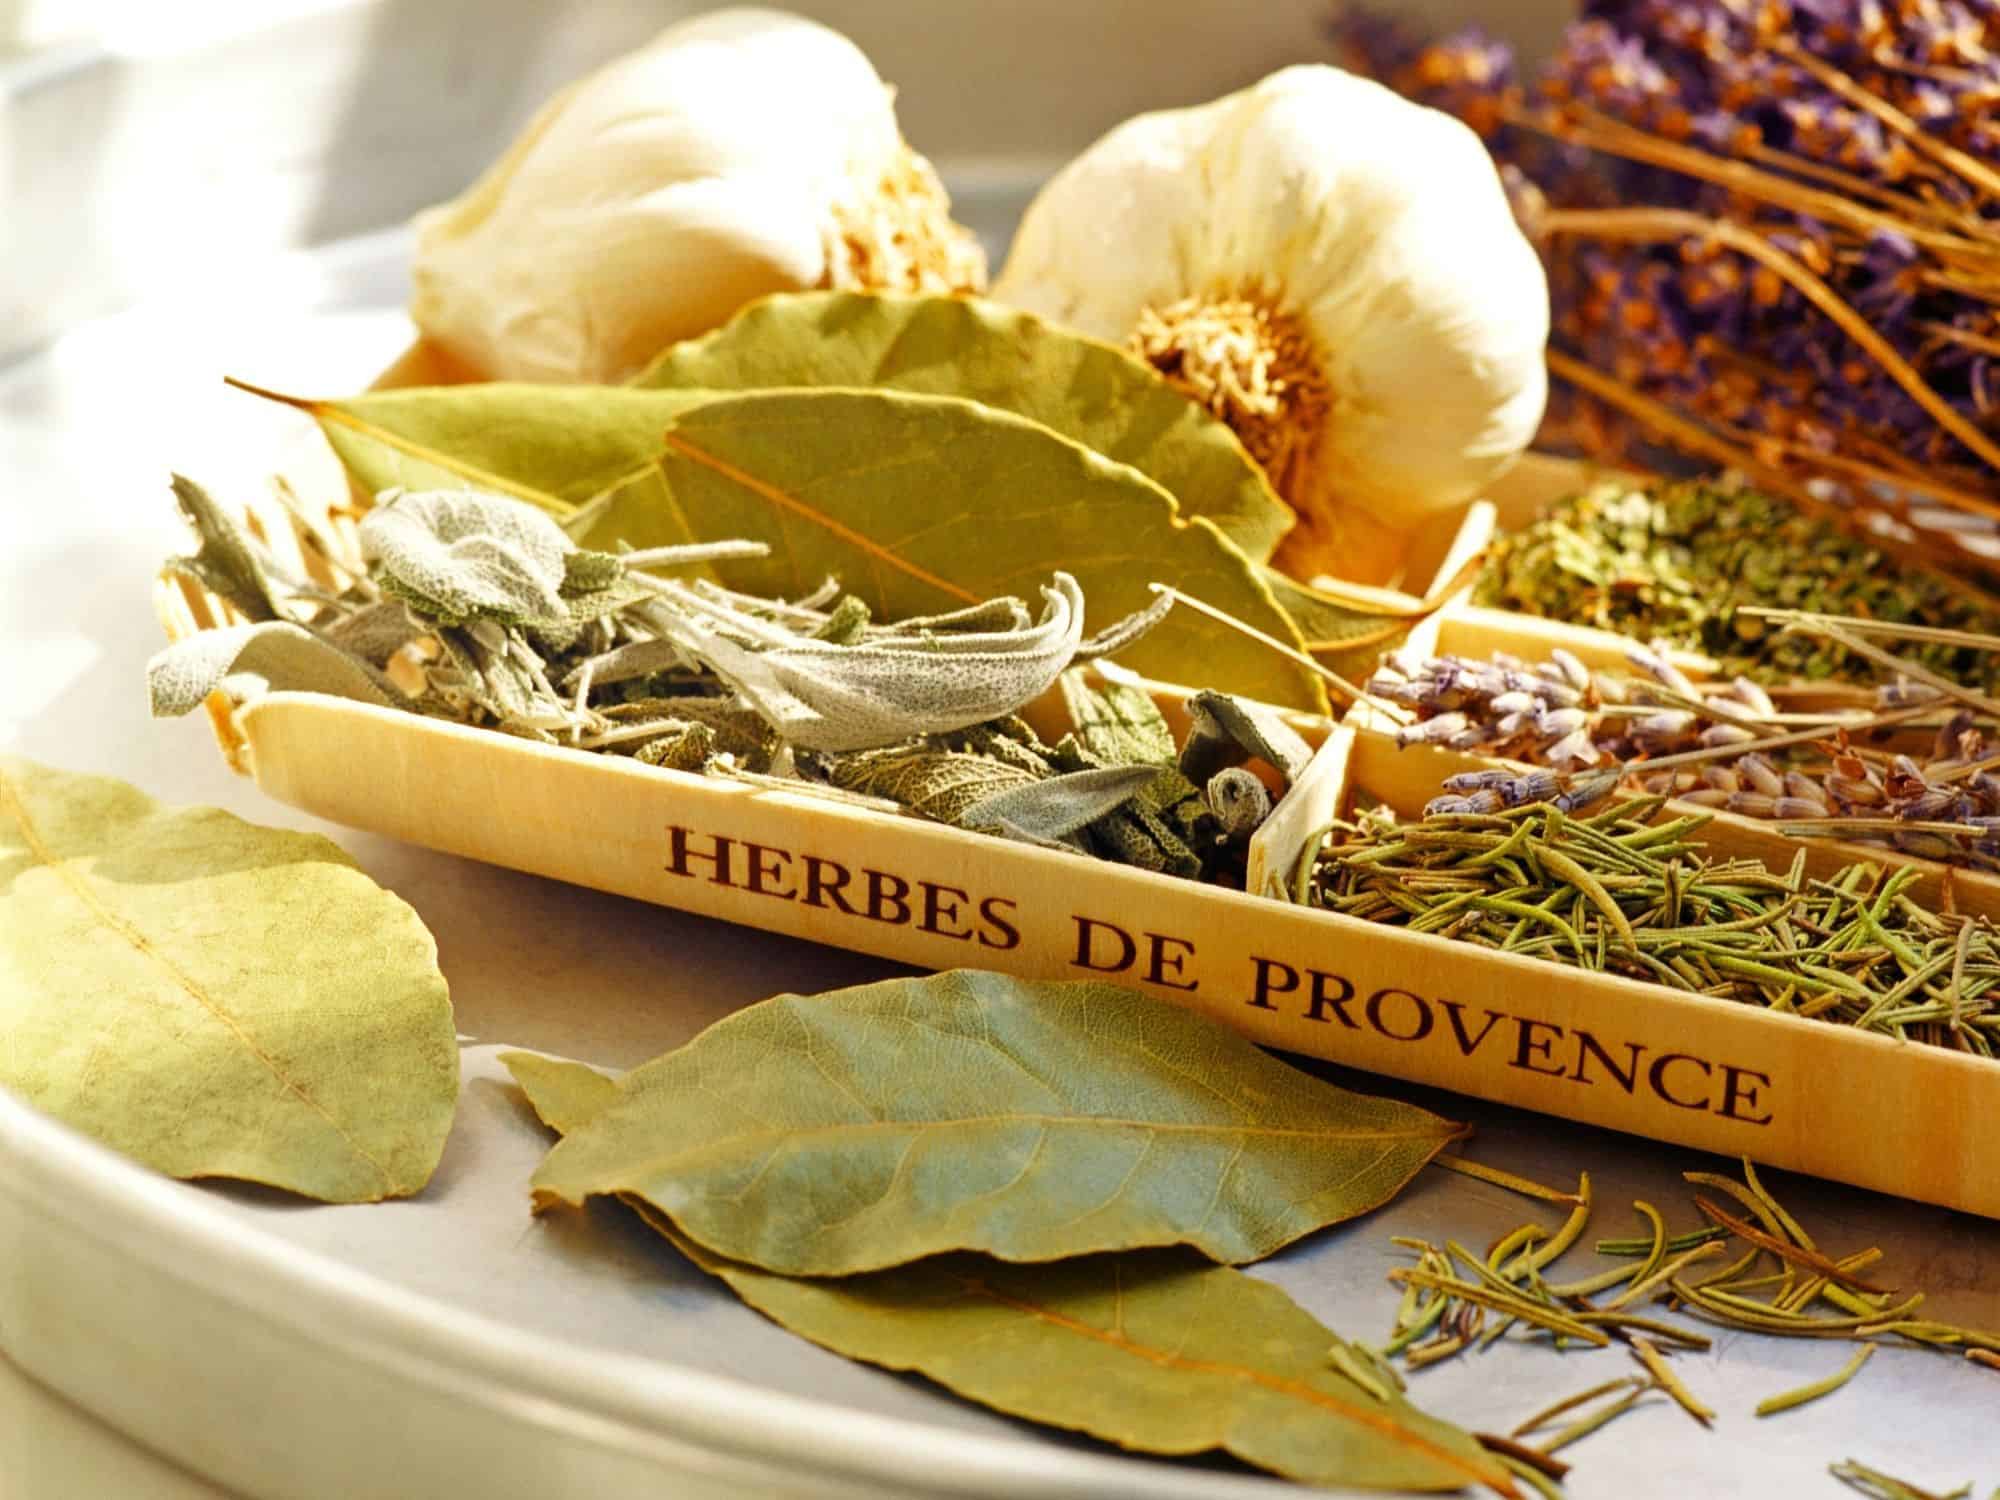 Best souvenirs from France - herbes de provence